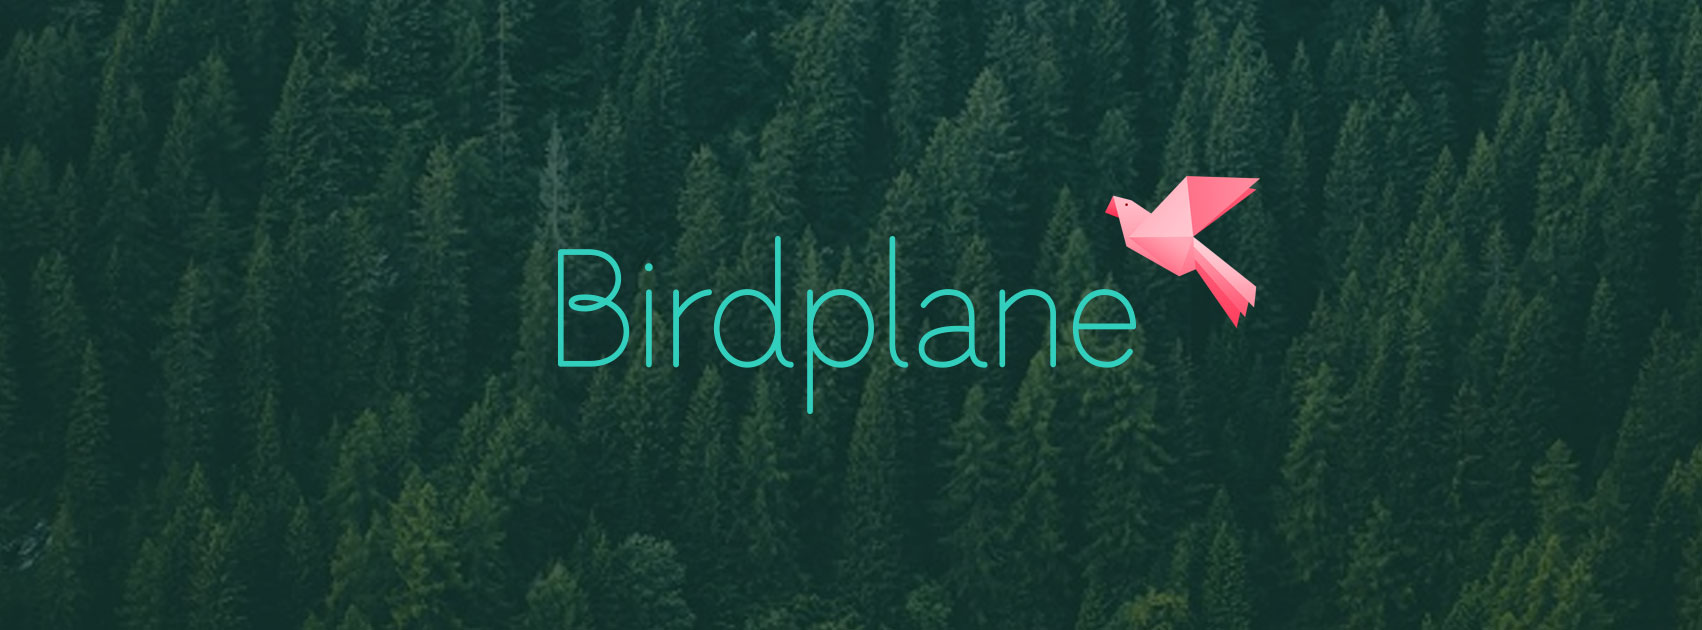 Birdplane social cover